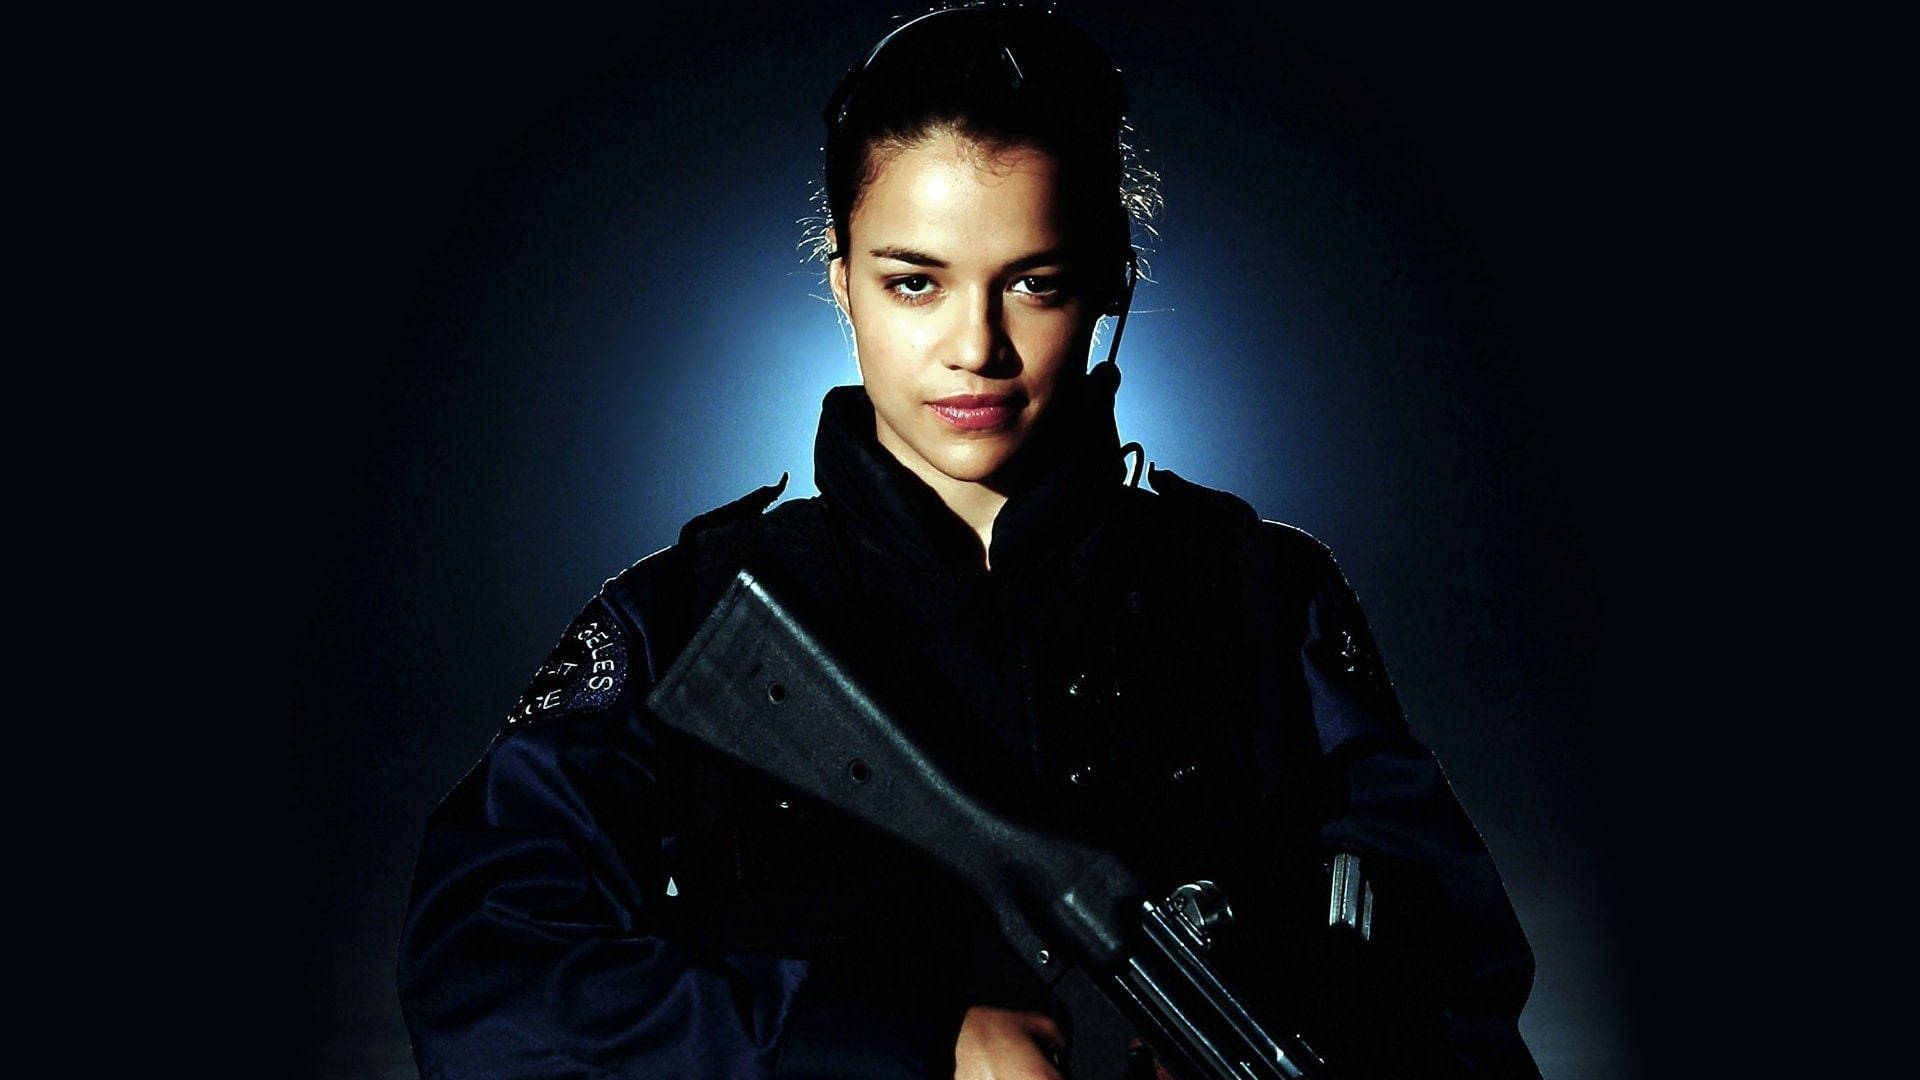 Michellerodriguez Als Officer Iii Christina 